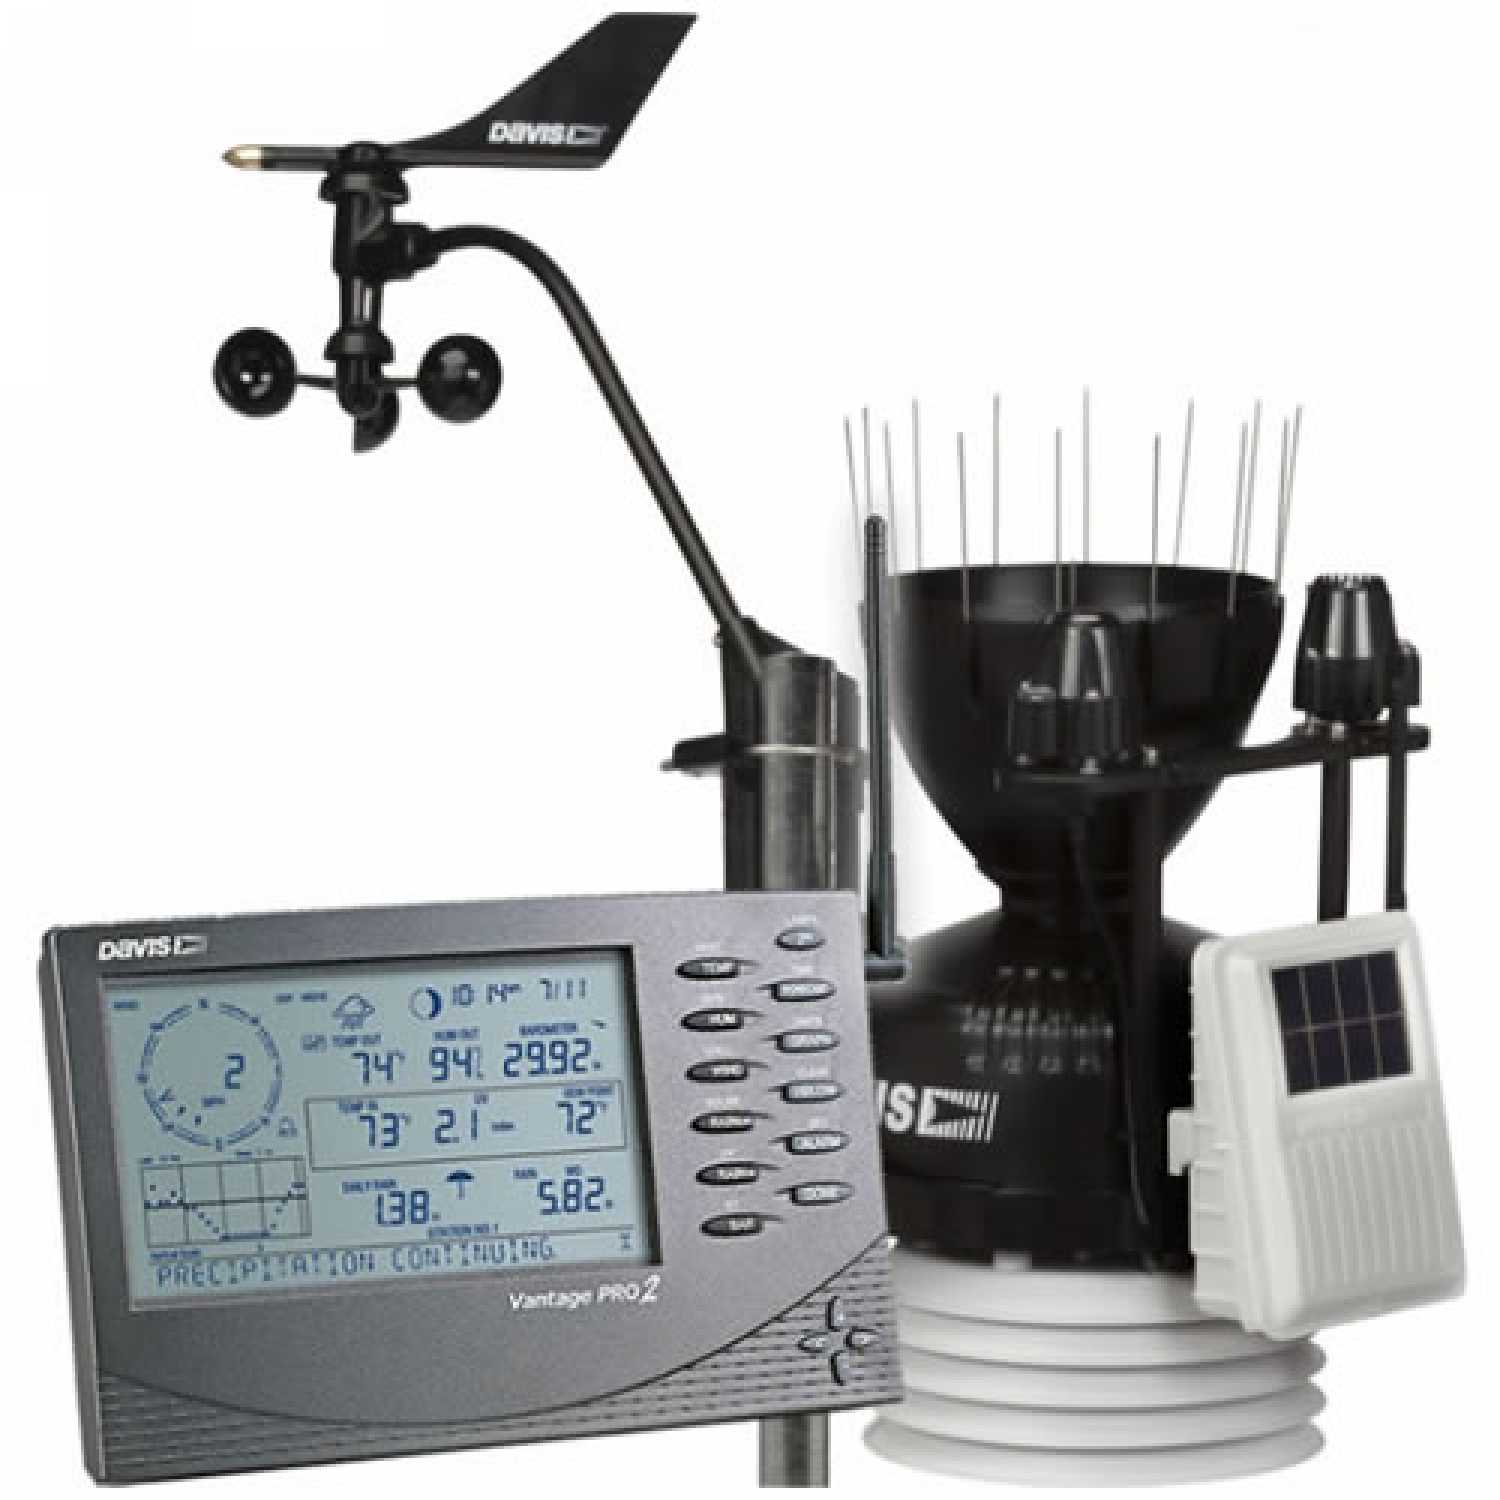 Davis Vantage Pro2 Plus [6162] Wireless Weather Station w/ UV & Solar  Radiation Sensors, Jual, Harga, Price